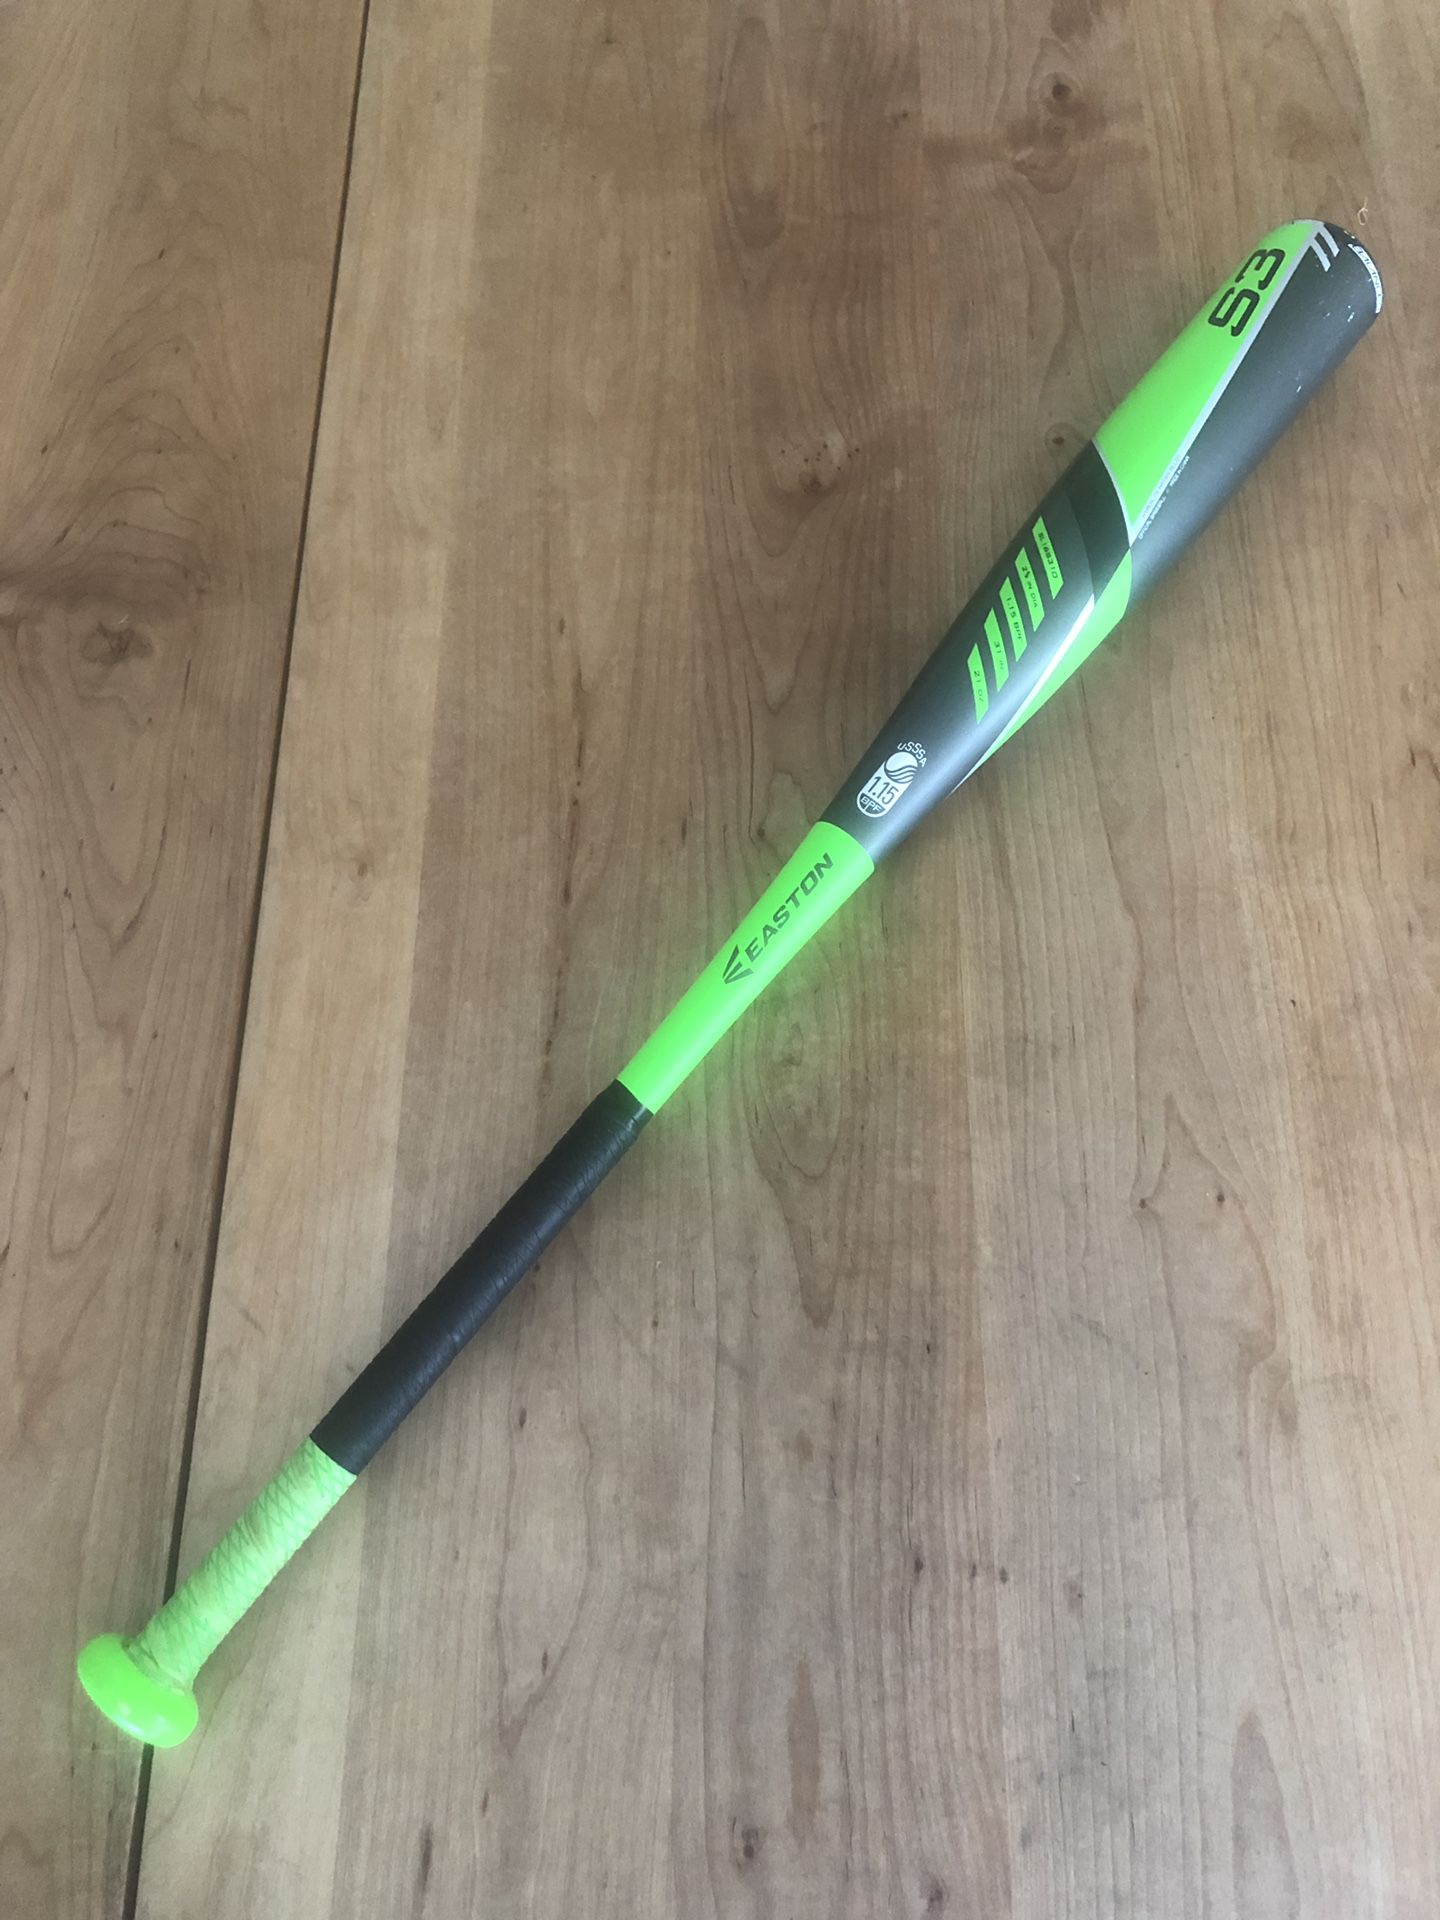 Easton S3 31” Baseball Bat Excellent Condition!